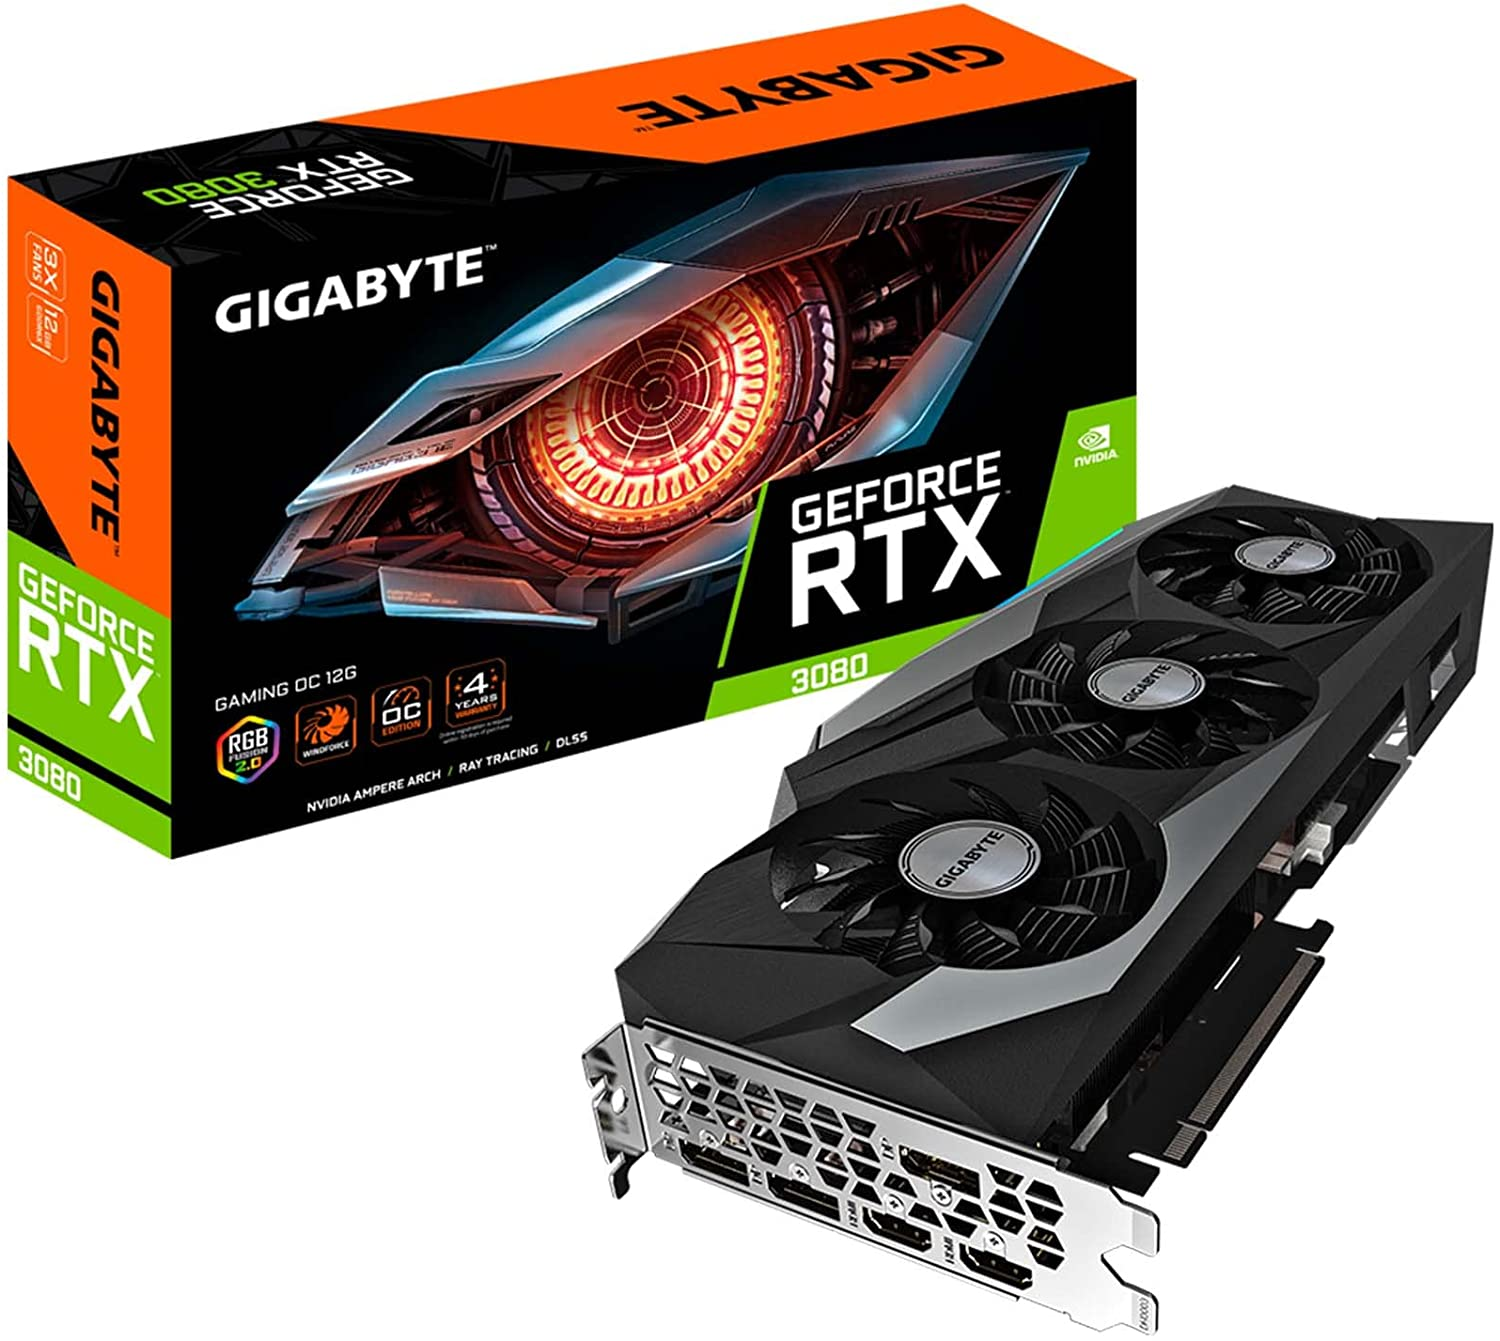 GIGABYTE GeForce RTX 3080 Gaming OC 12G Graphics Card, 3X WINDFORCE Fans, 12GB 384-bit GDDR6X, GV-N3080GAMING OC-12GD $870.00